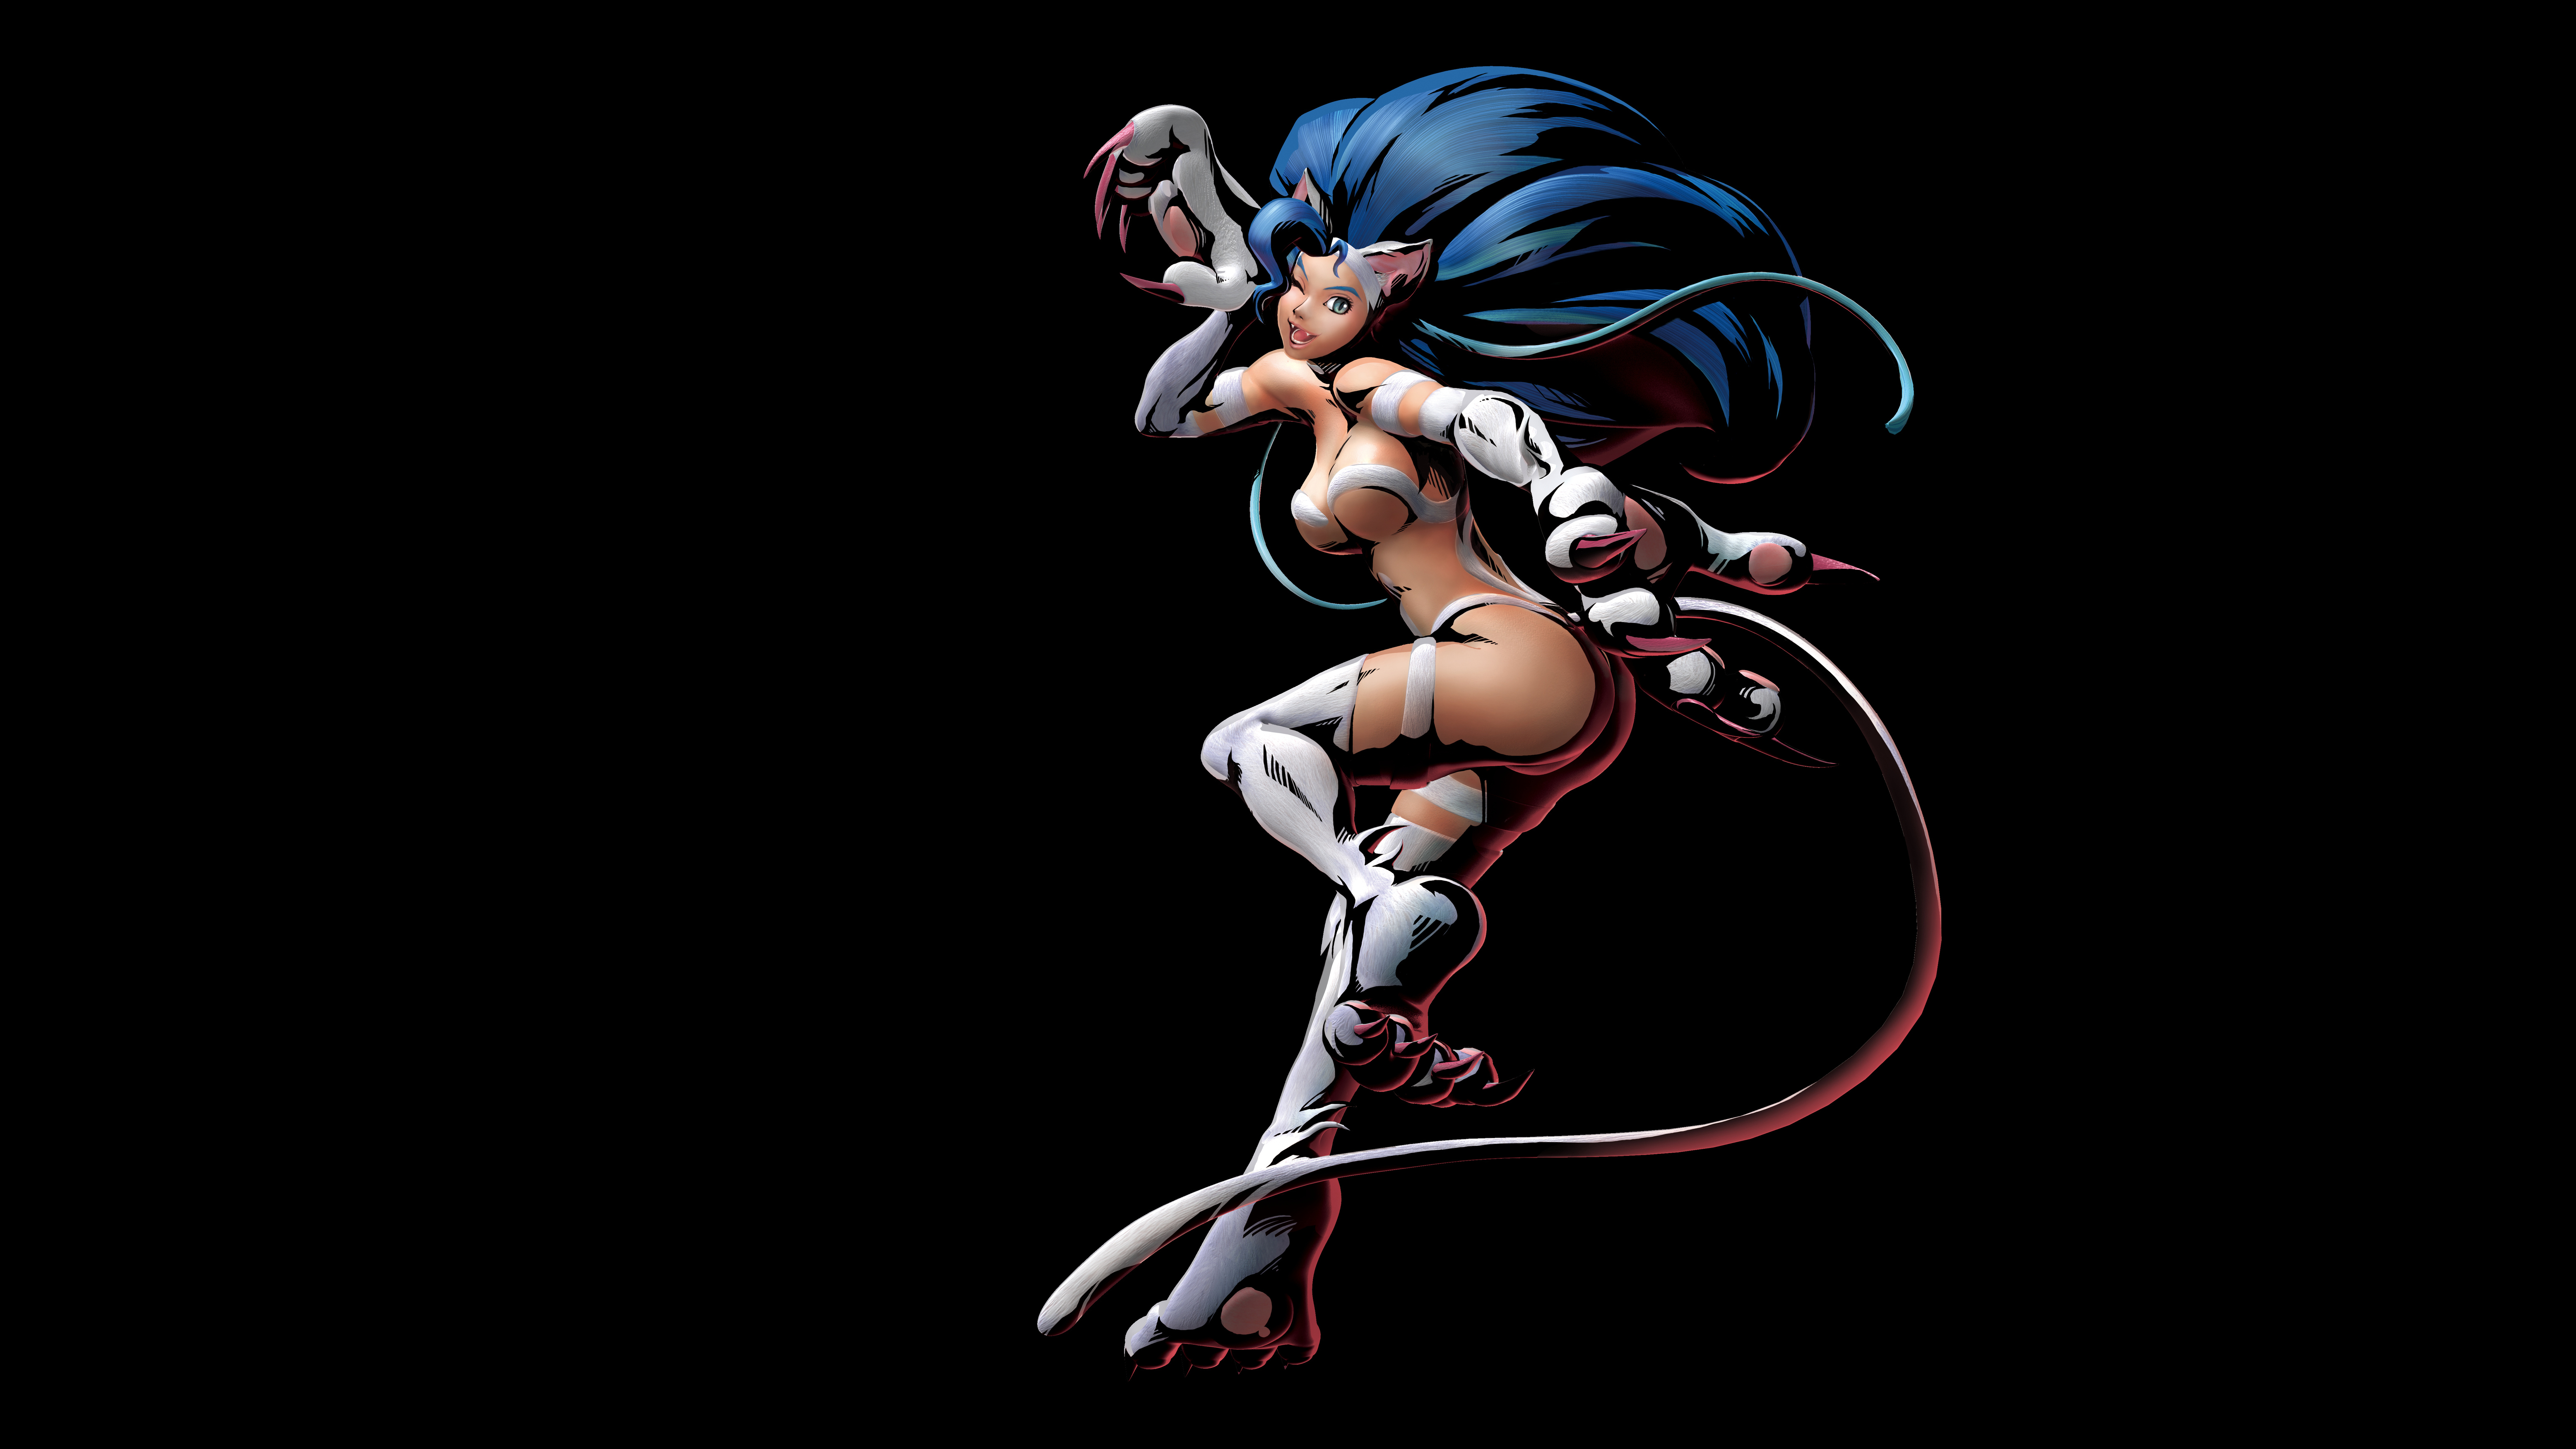 Anime 6222x3500 Darkstalkers video game characters Capcom Marvel vs. Capcom 3 cat girl Felicia (Darkstalkers) blue hair simple background dark background tail